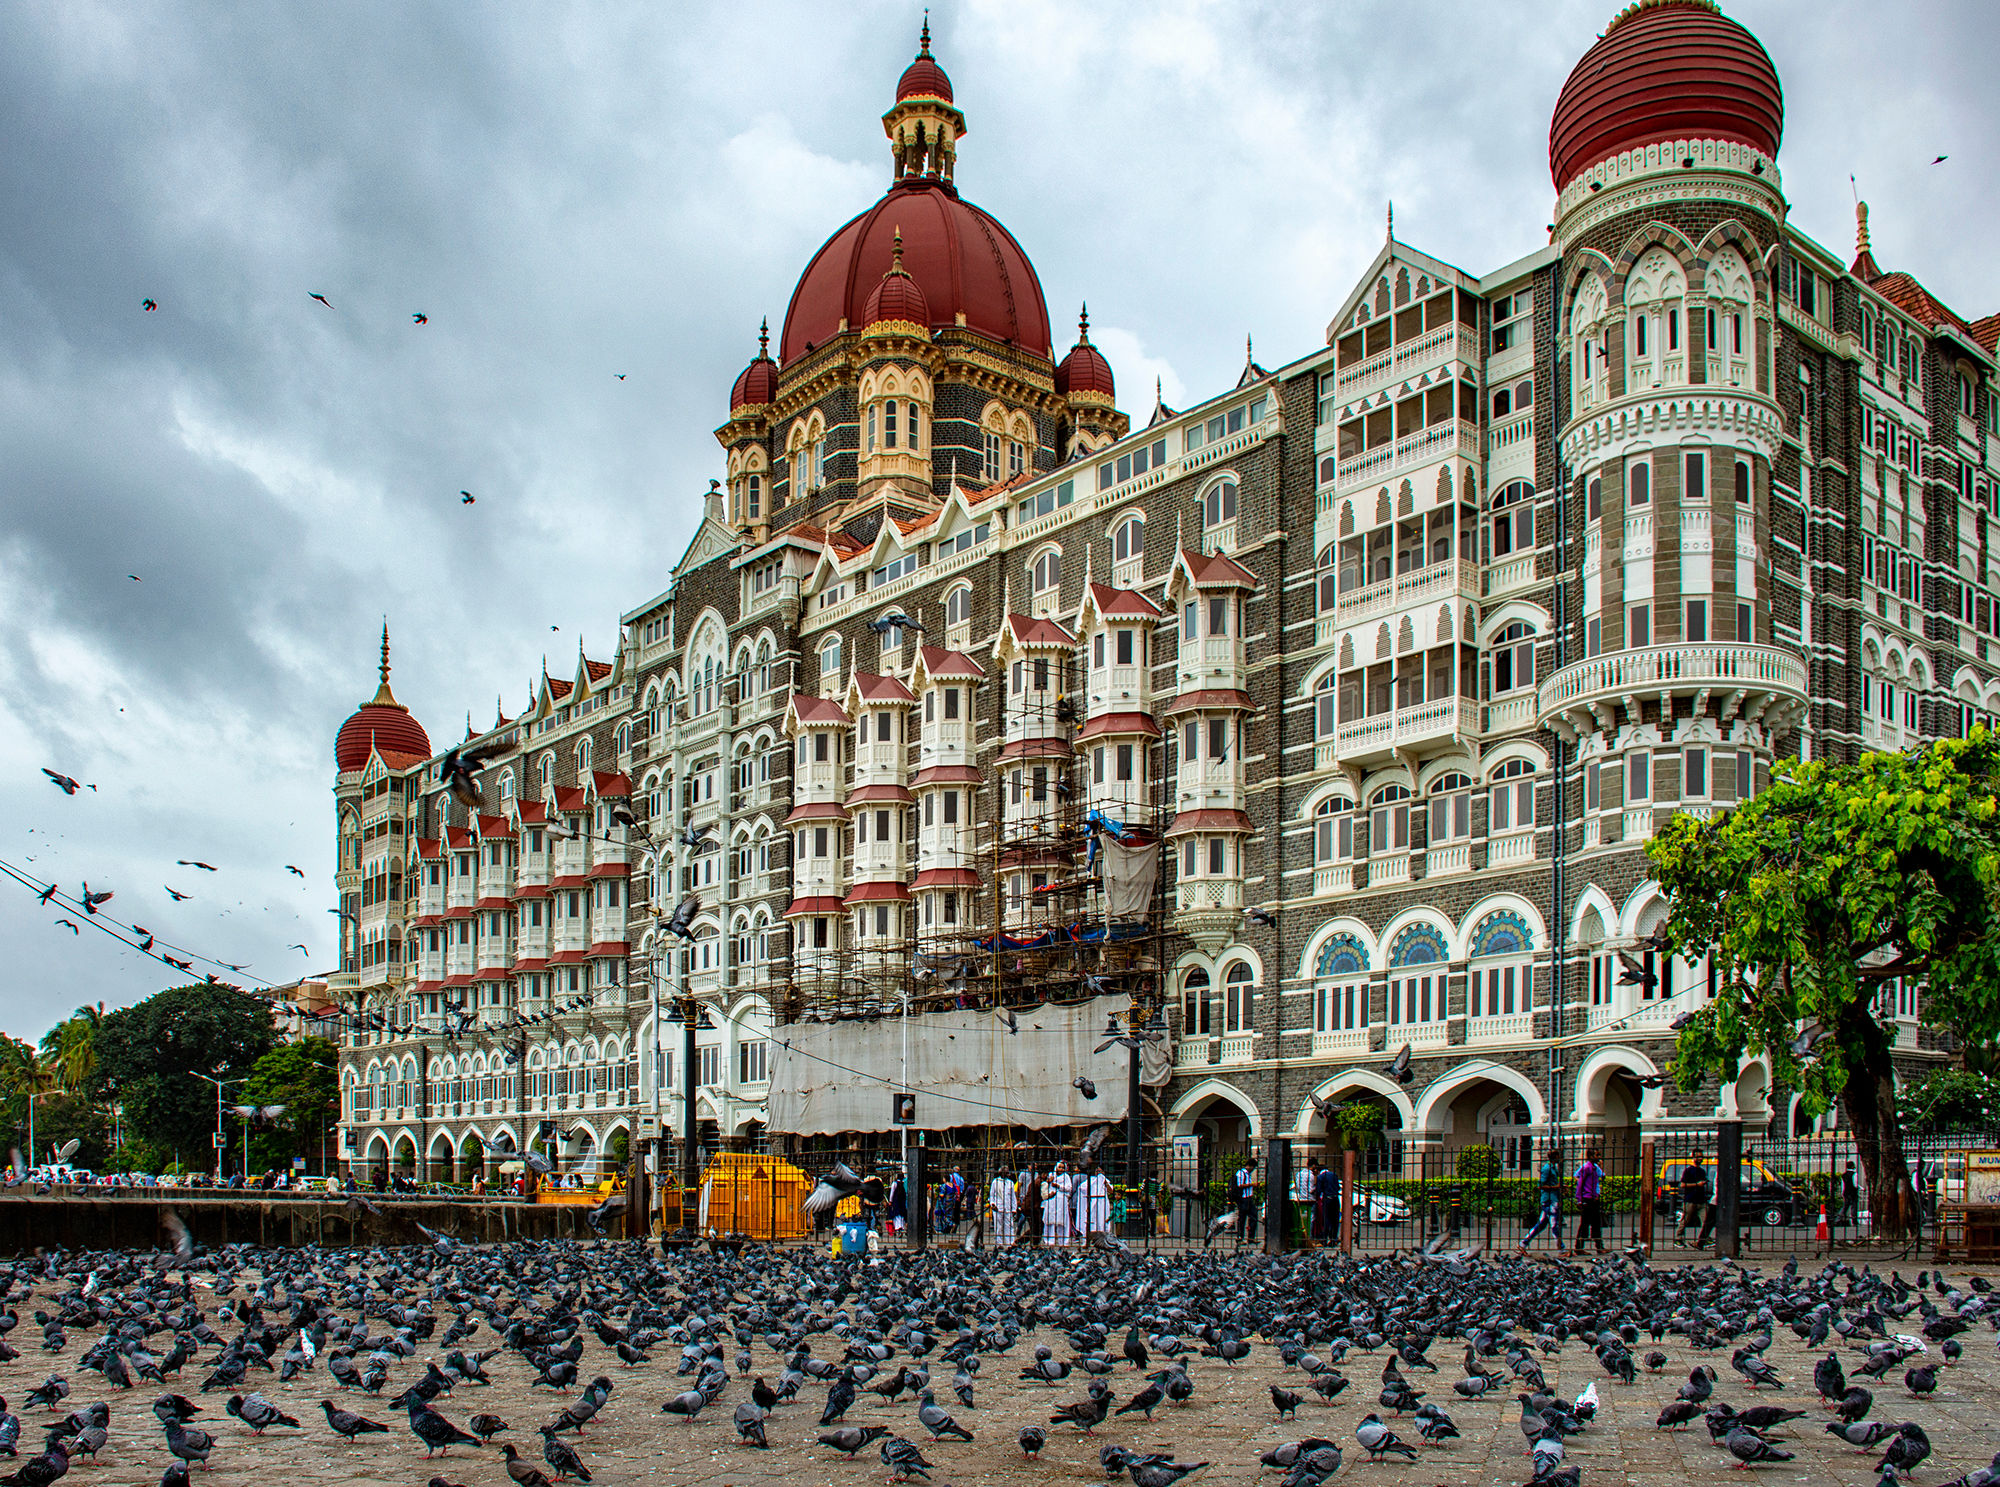 The story behind the establishment of India’s iconic Taj hotel